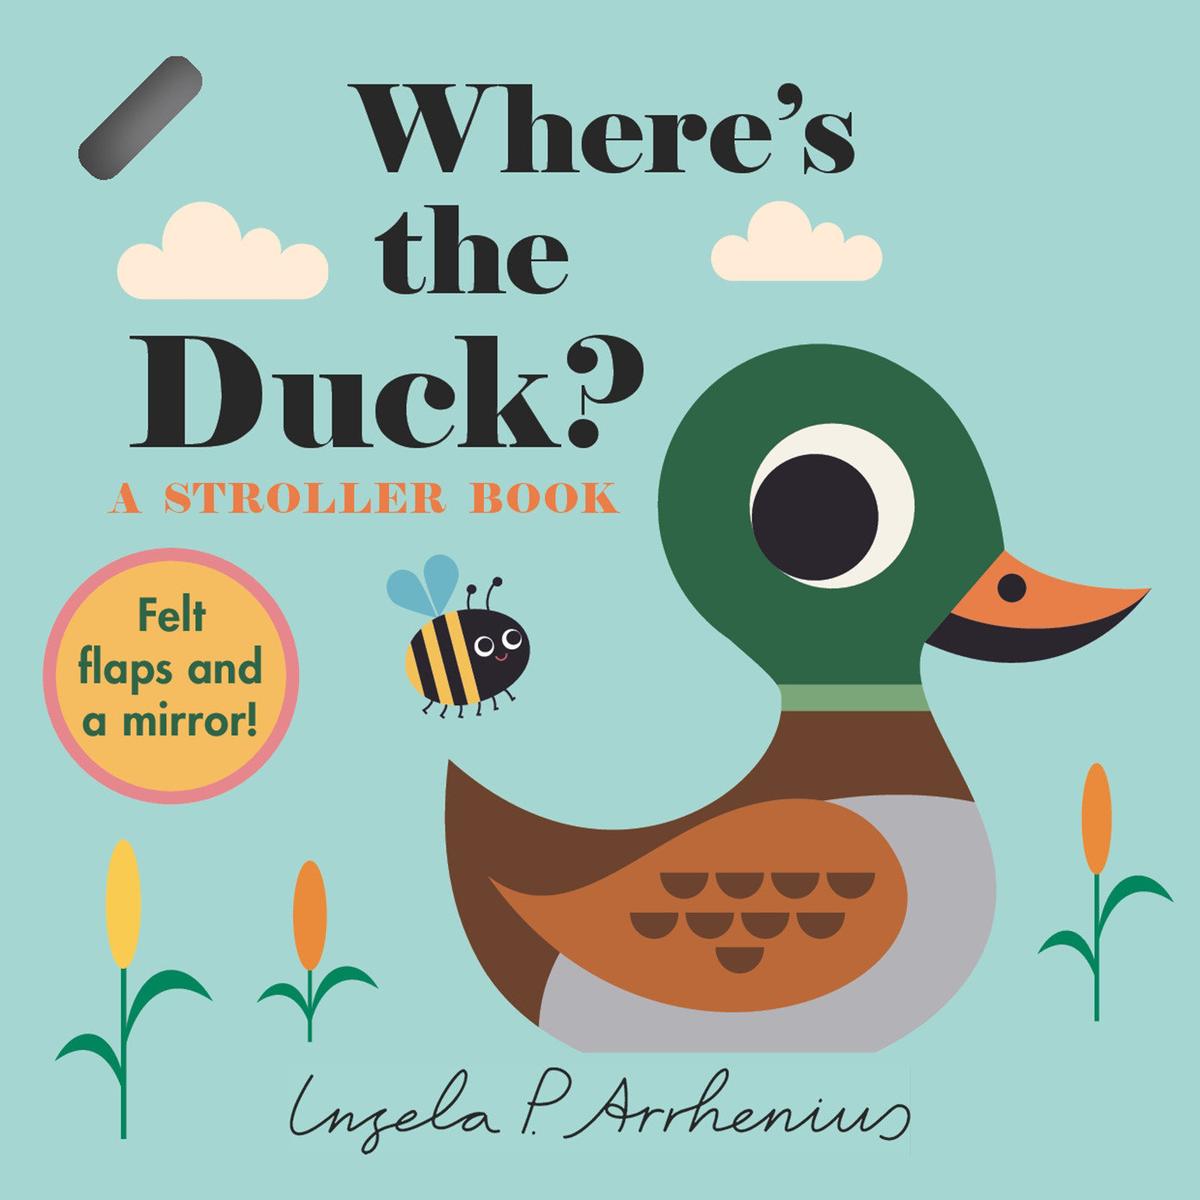 Where's the Duck? - A Stroller Book